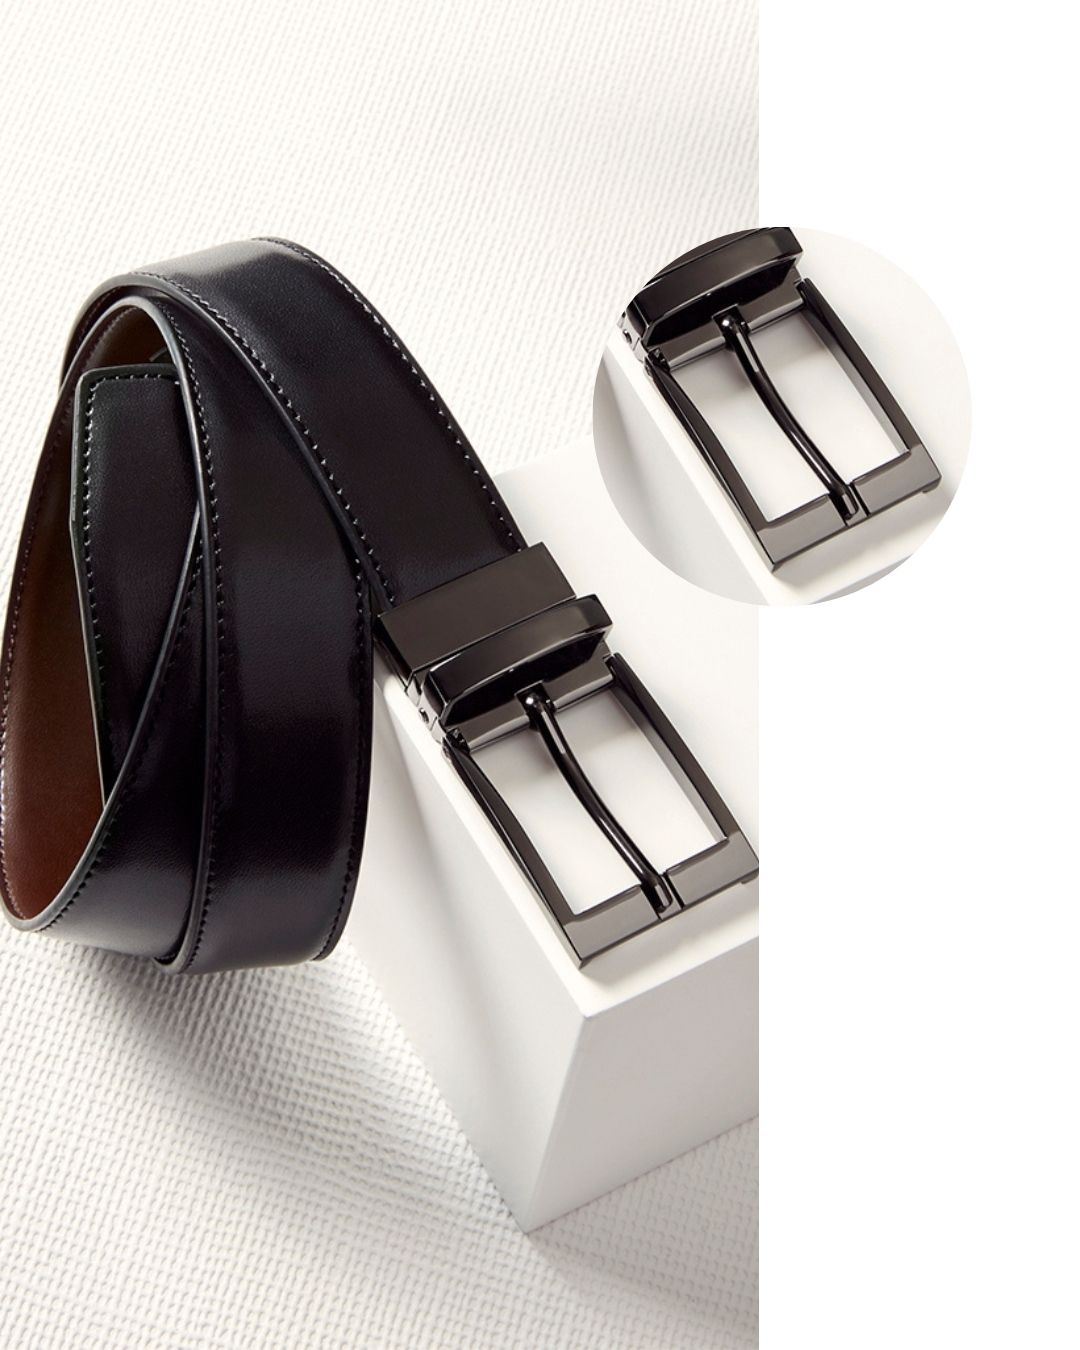 Mens Reversible Belts: Versatile Accessories for Every Look